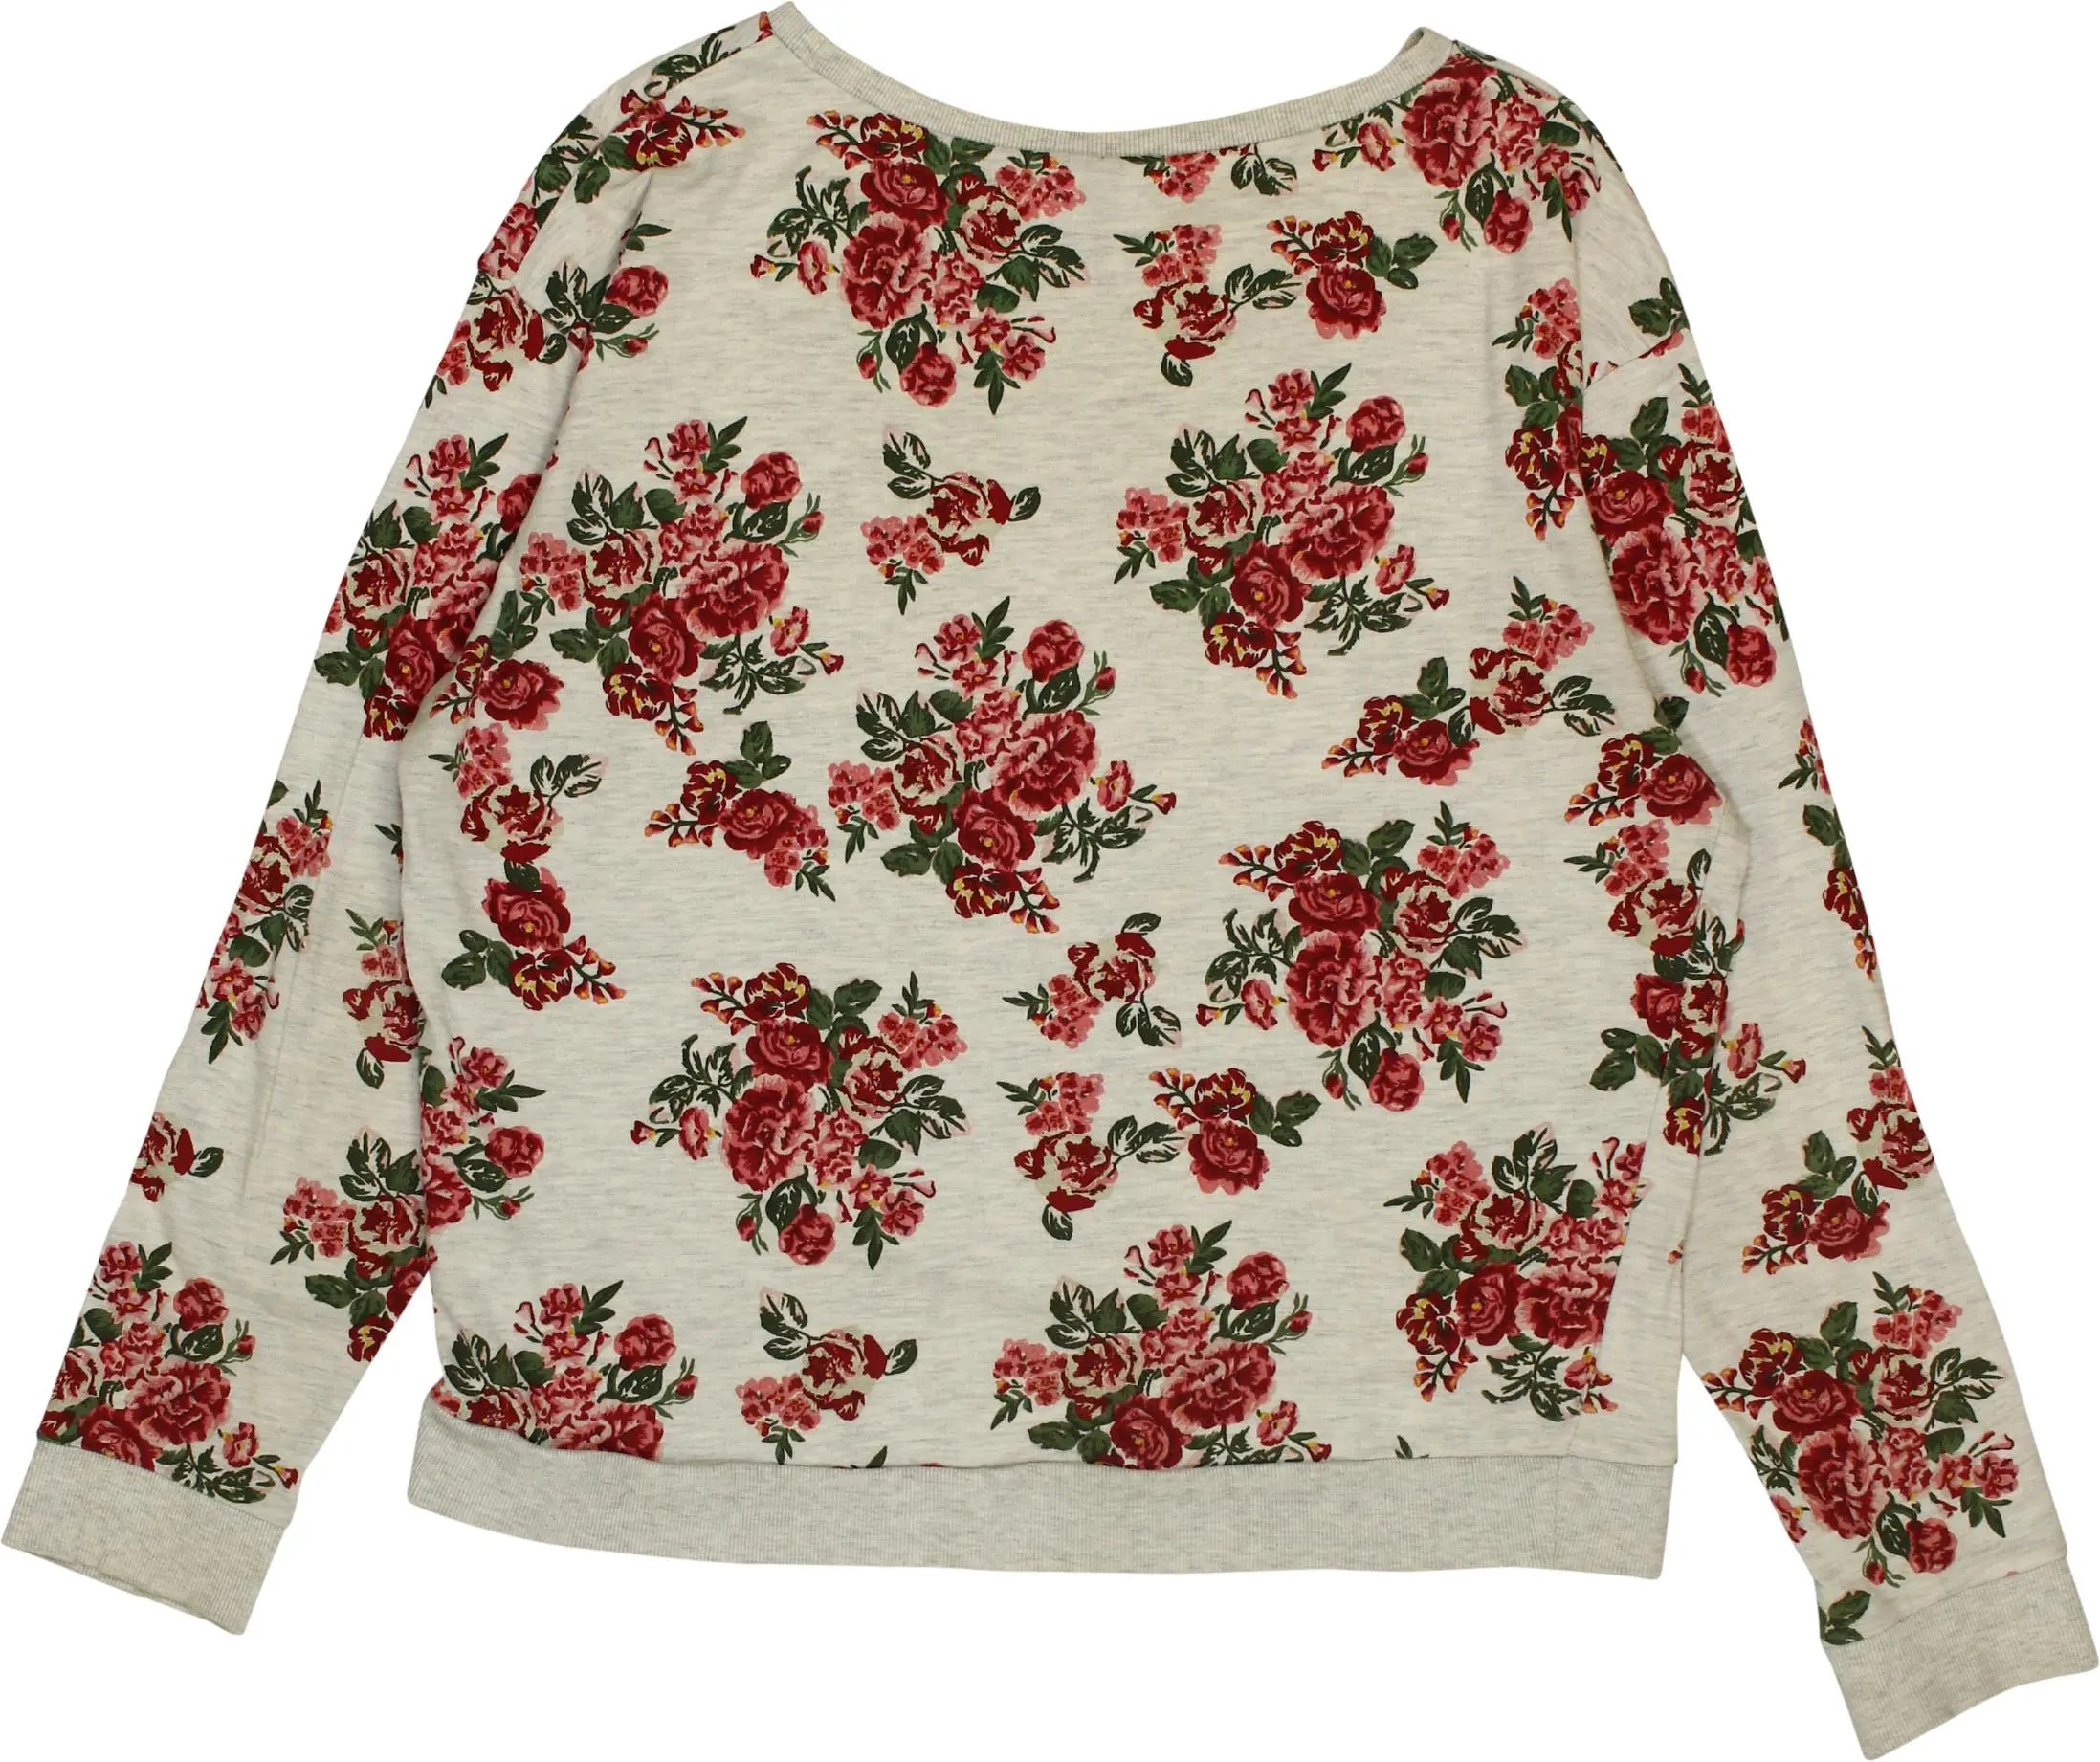 H&M - Floral Jumper- ThriftTale.com - Vintage and second handclothing